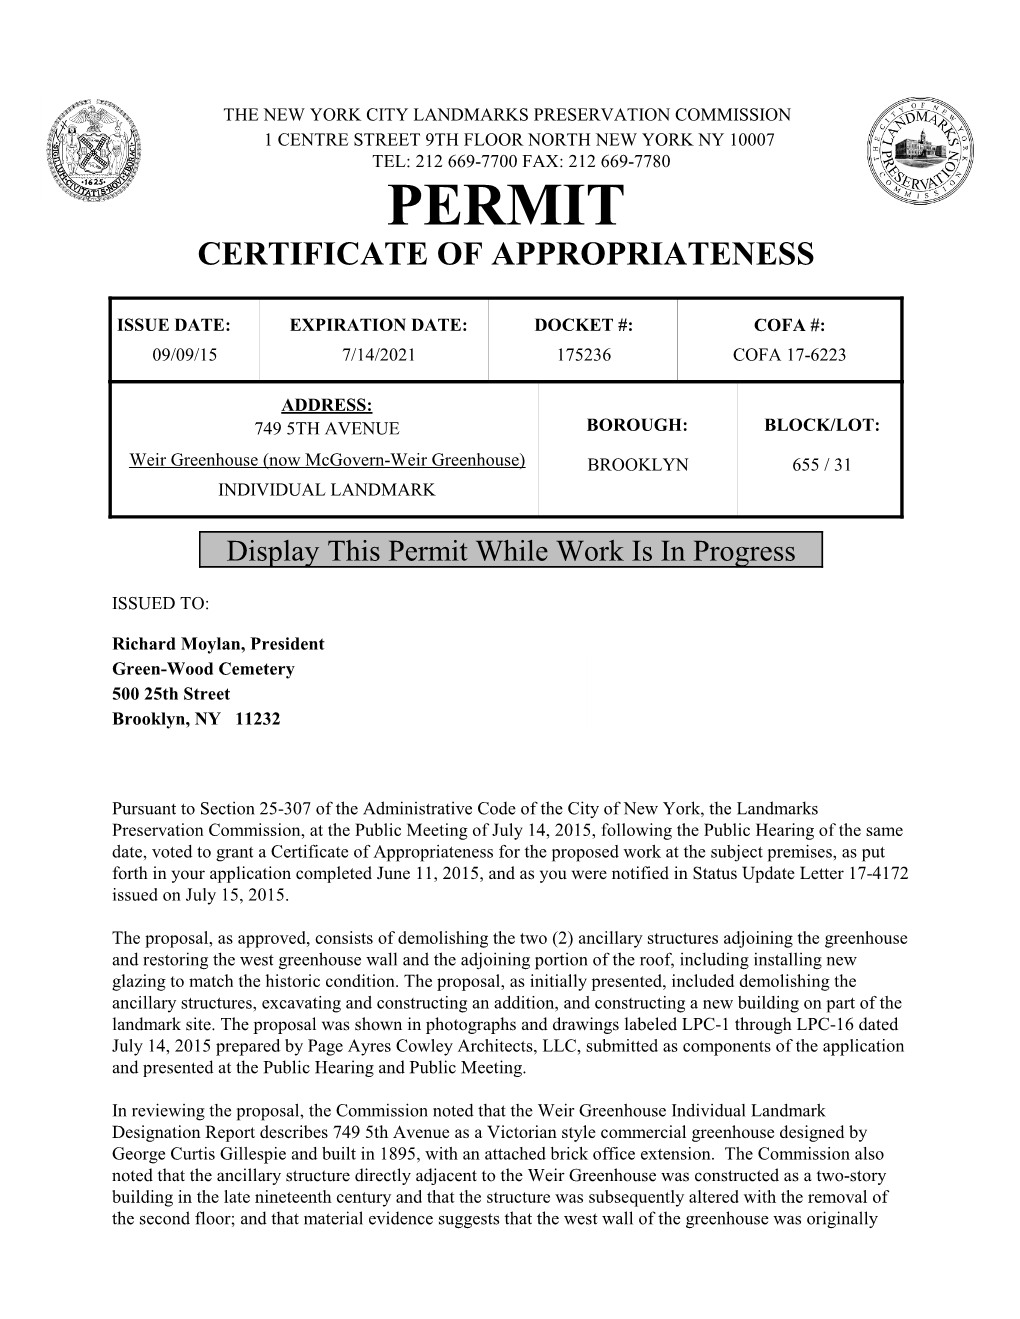 Permit Certificate of Appropriateness